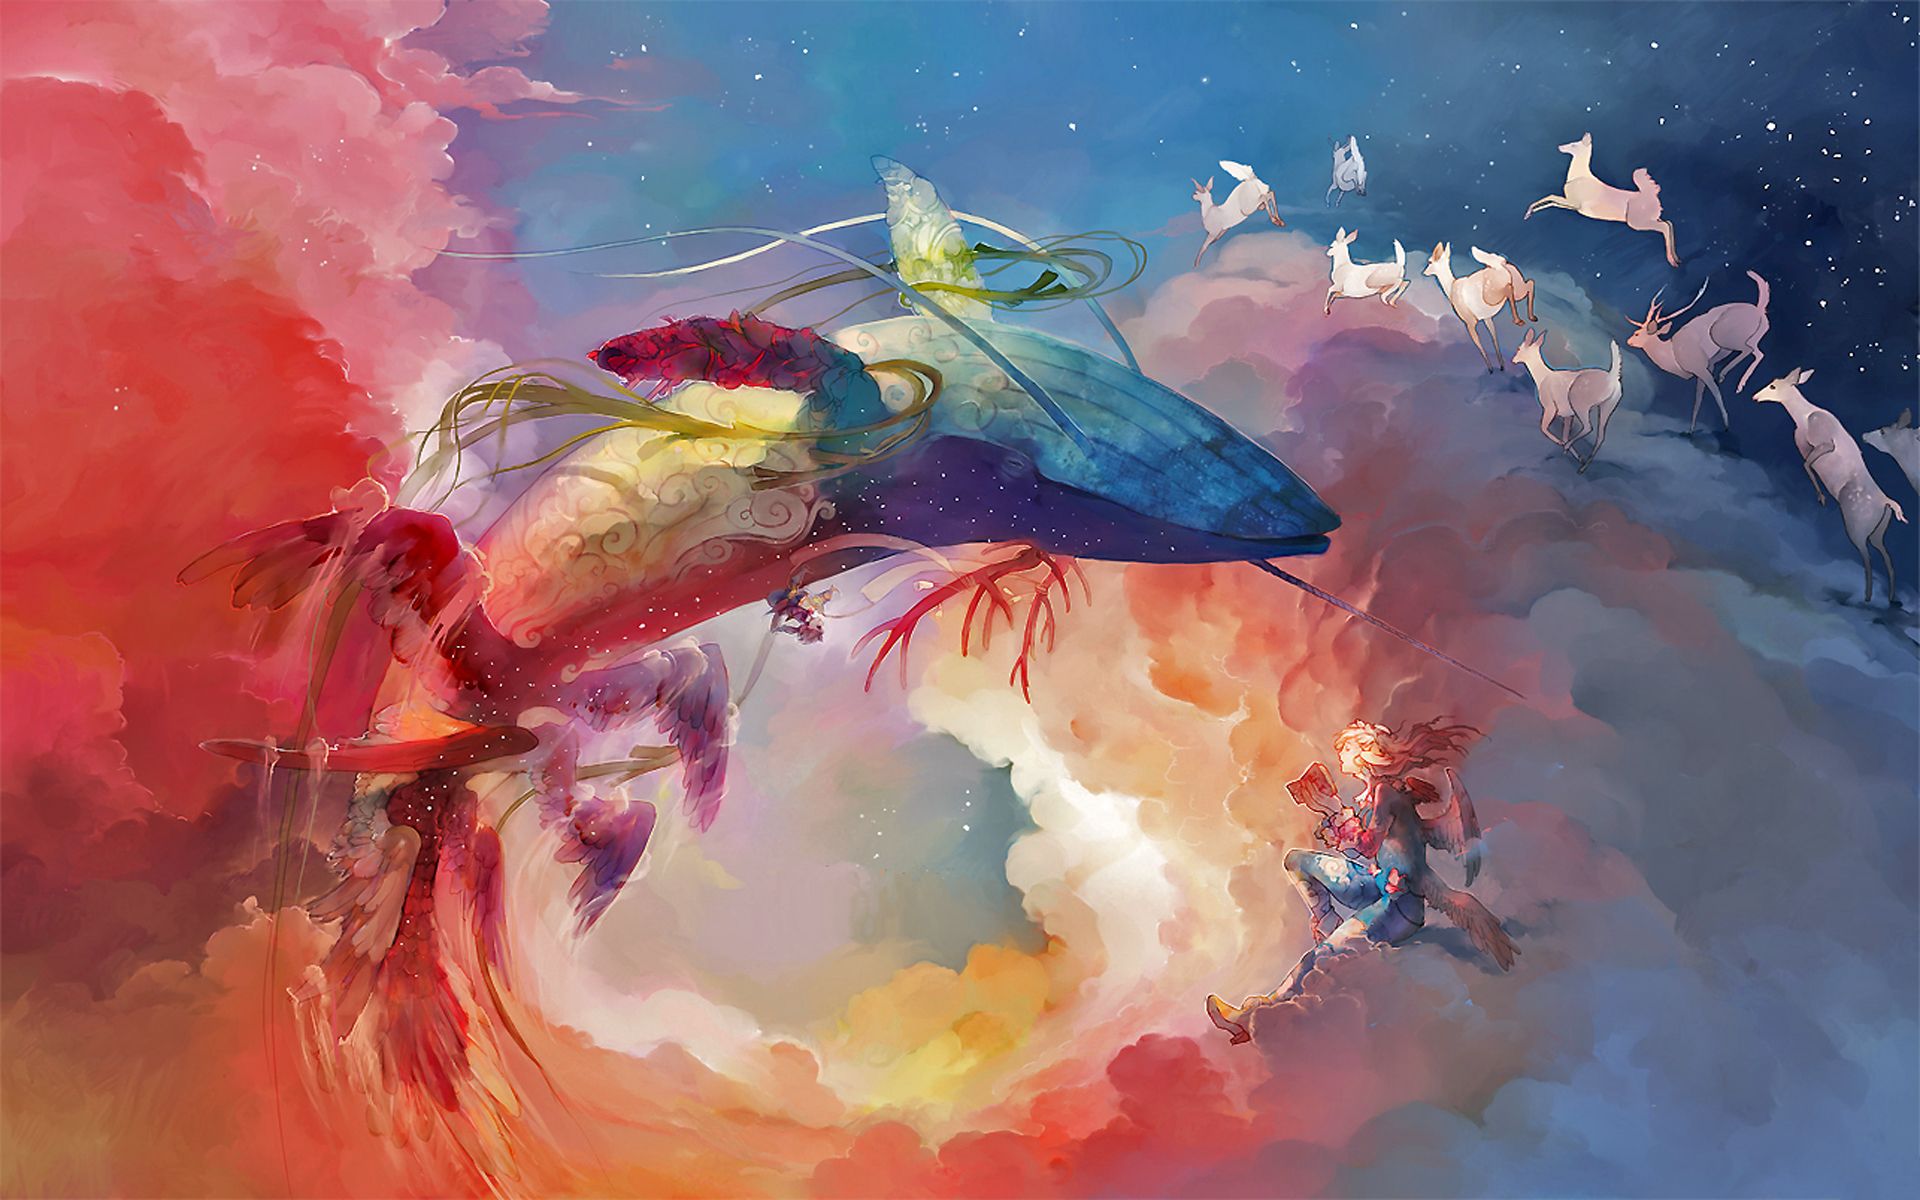 color, wings, clouds, fantasy, angel, magic, whale, surreal, sky, deer wallpaper